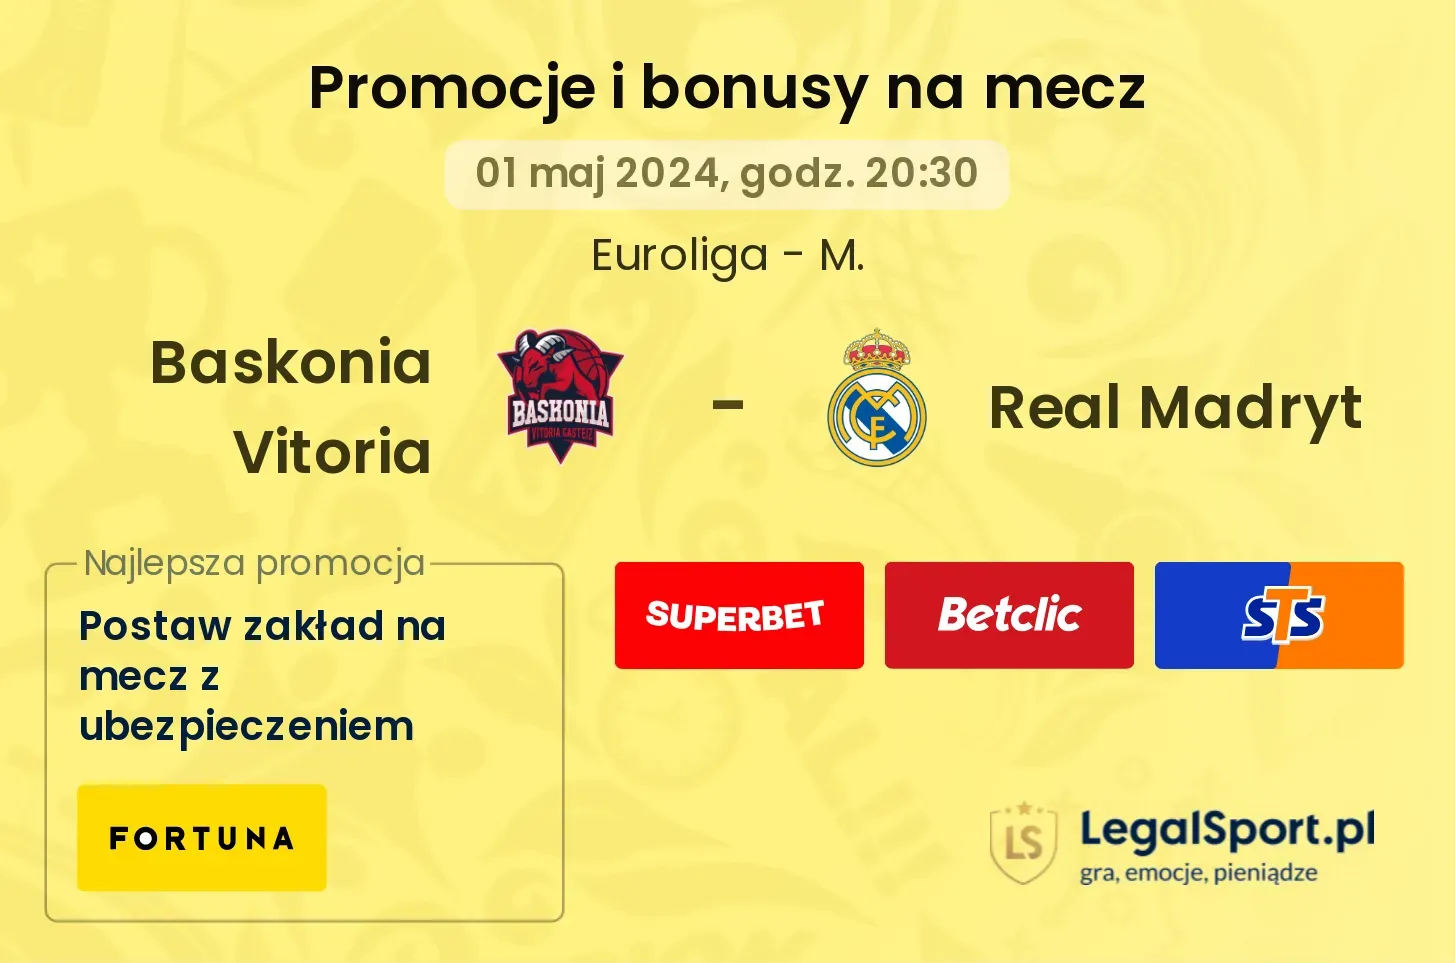 Baskonia Vitoria - Real Madryt promocje i bonusy (01.05, 20:30)